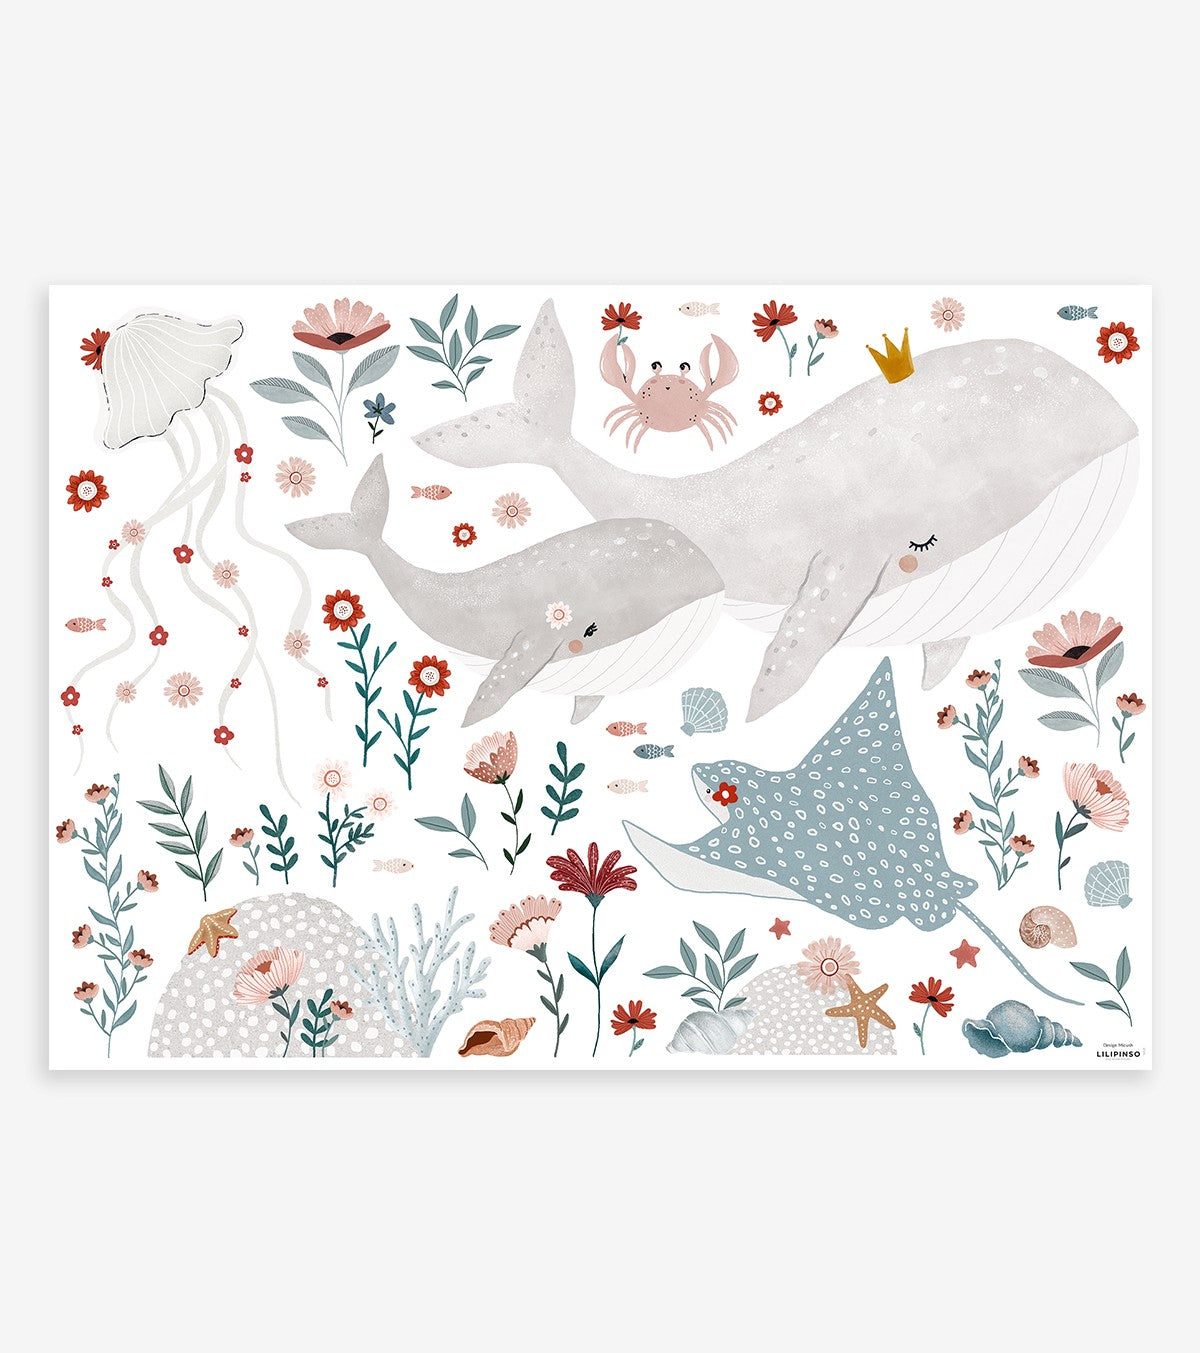 OCEAN FIELD - Adesivi murali muraux - Oceano: animali e fiori